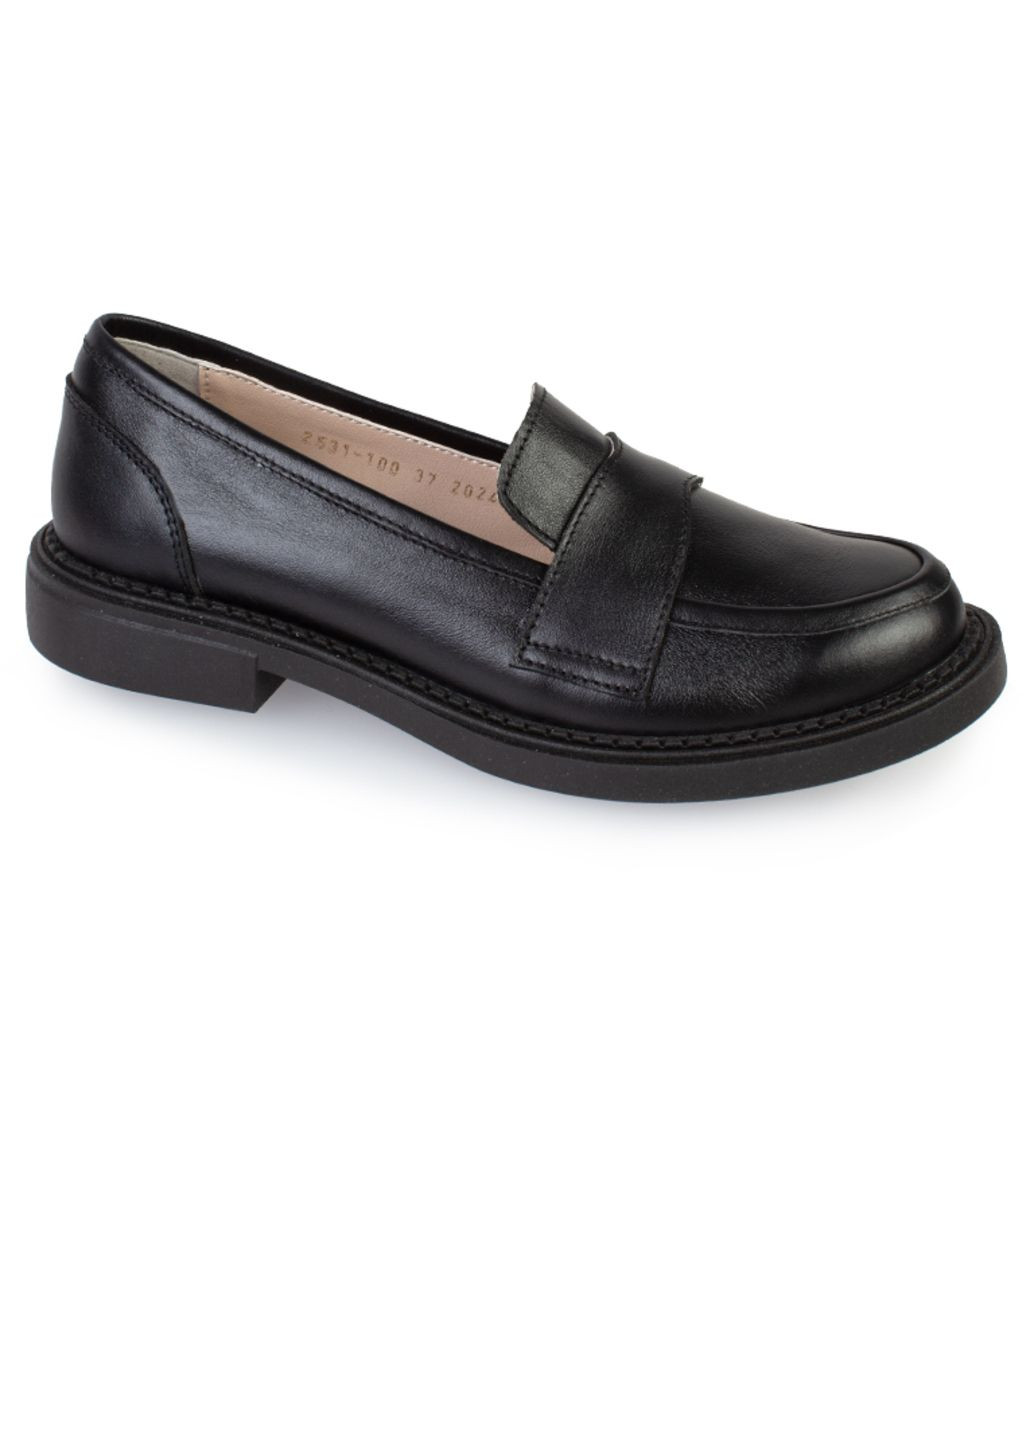 Туфли лоферы женские бренда 8200547_(1) ModaMilano на среднем каблуке